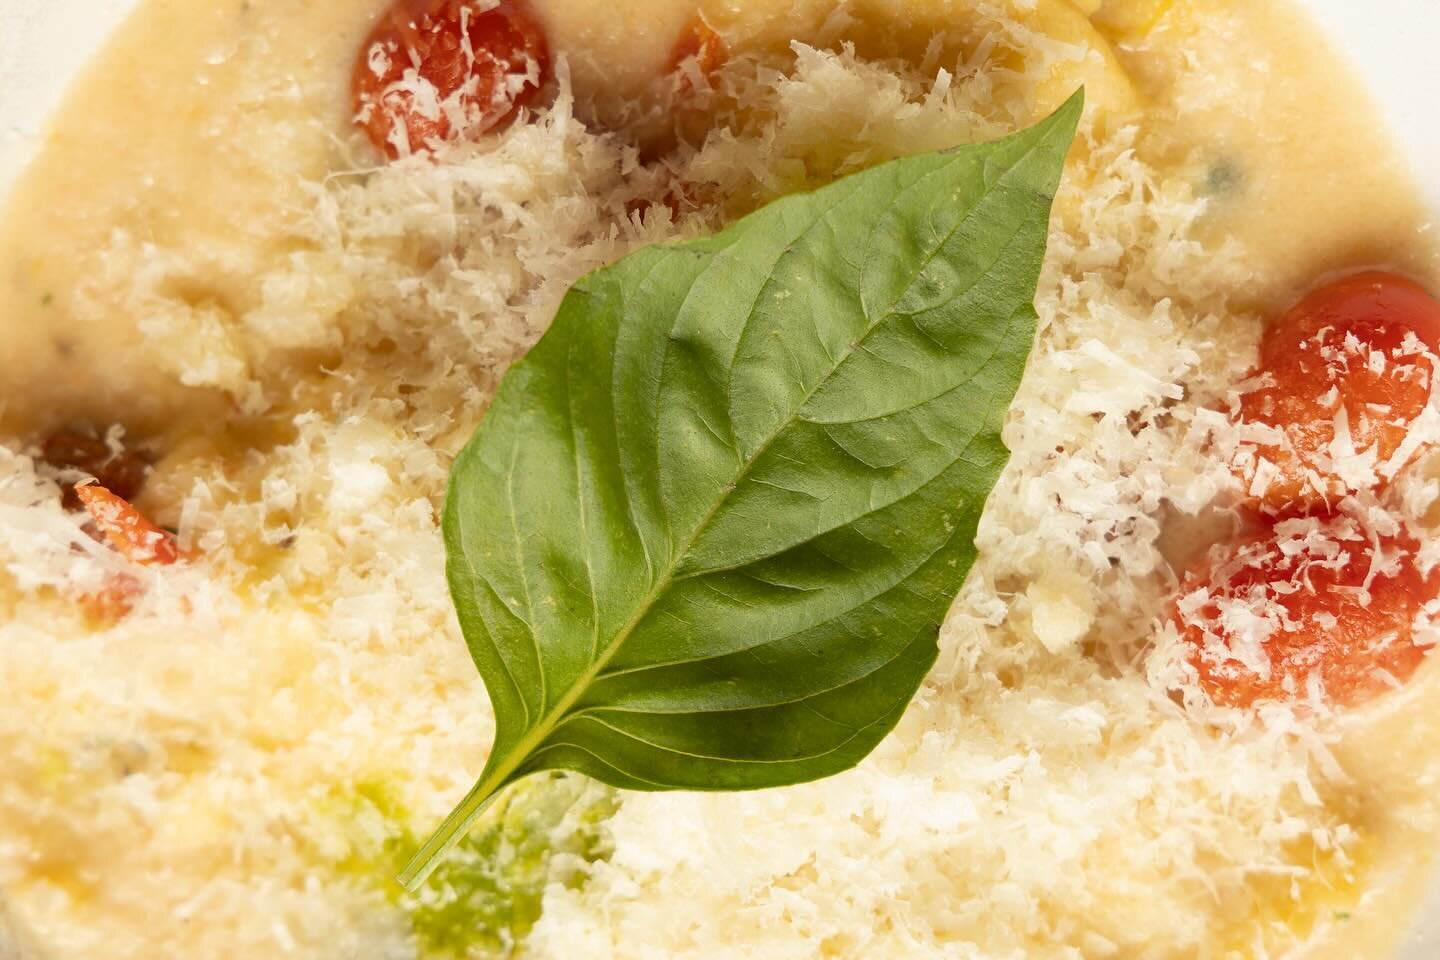 Ravioli de Ricotta con toda la frescura de sus ingredientes  #pasta #restauranteitaliano #cdmx